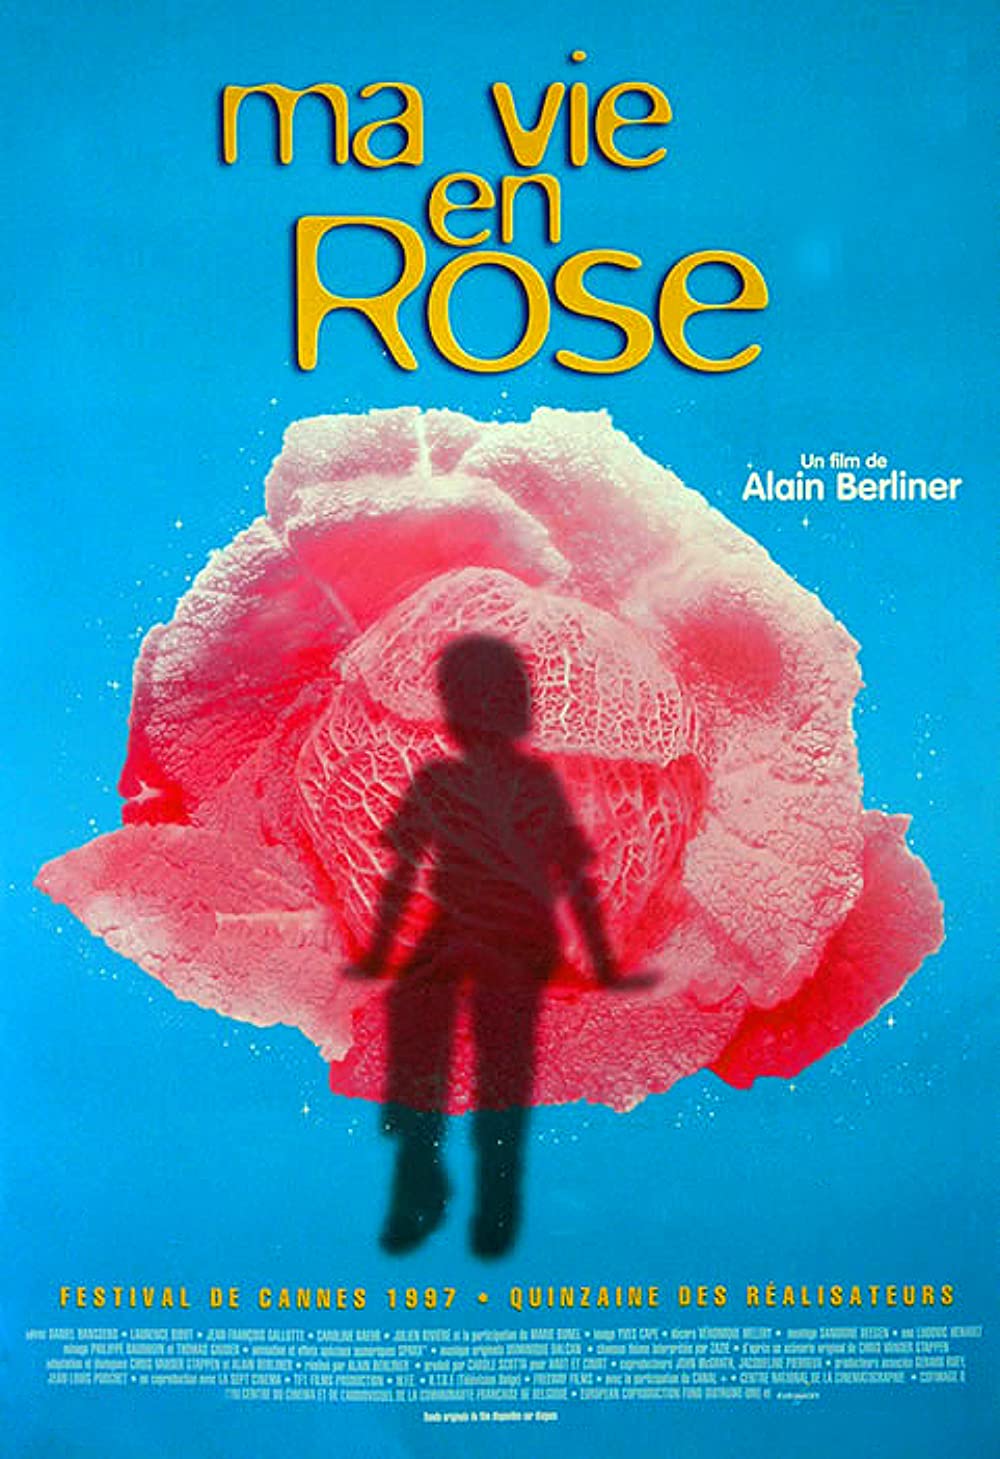 Filmbeschreibung zu Ma vie en rose